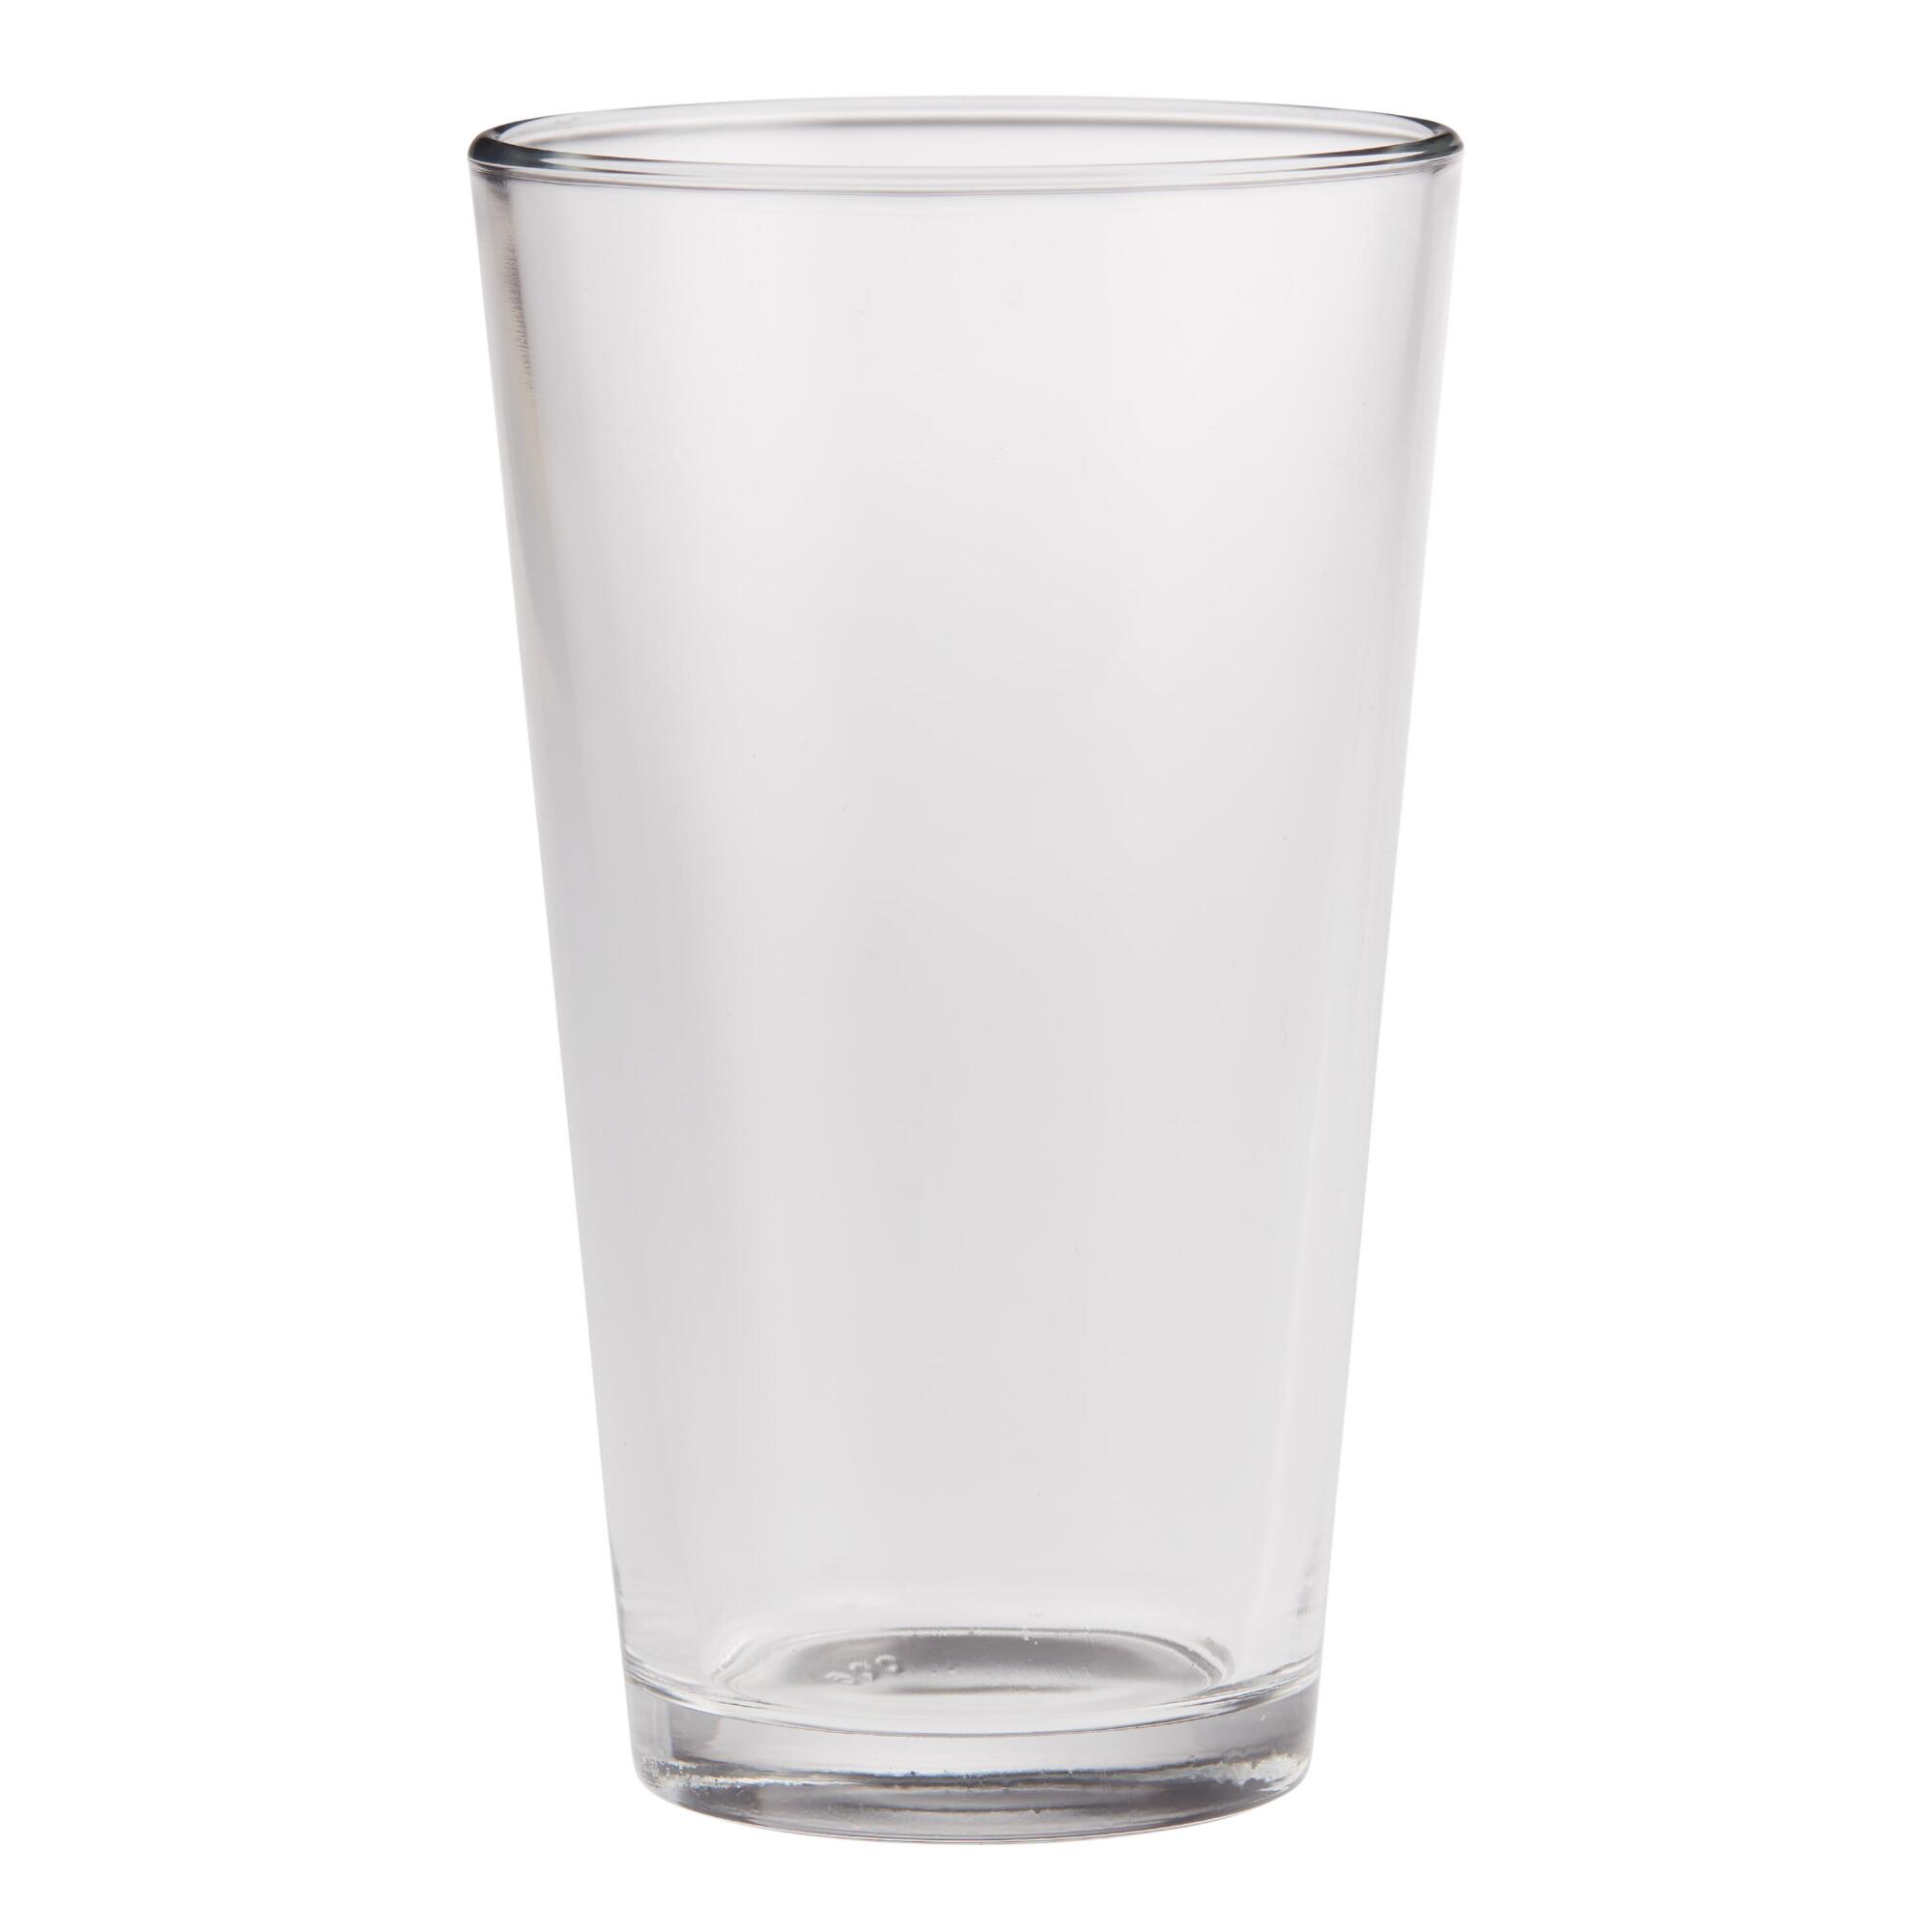 Pint Glass, Set of 4 by World Market